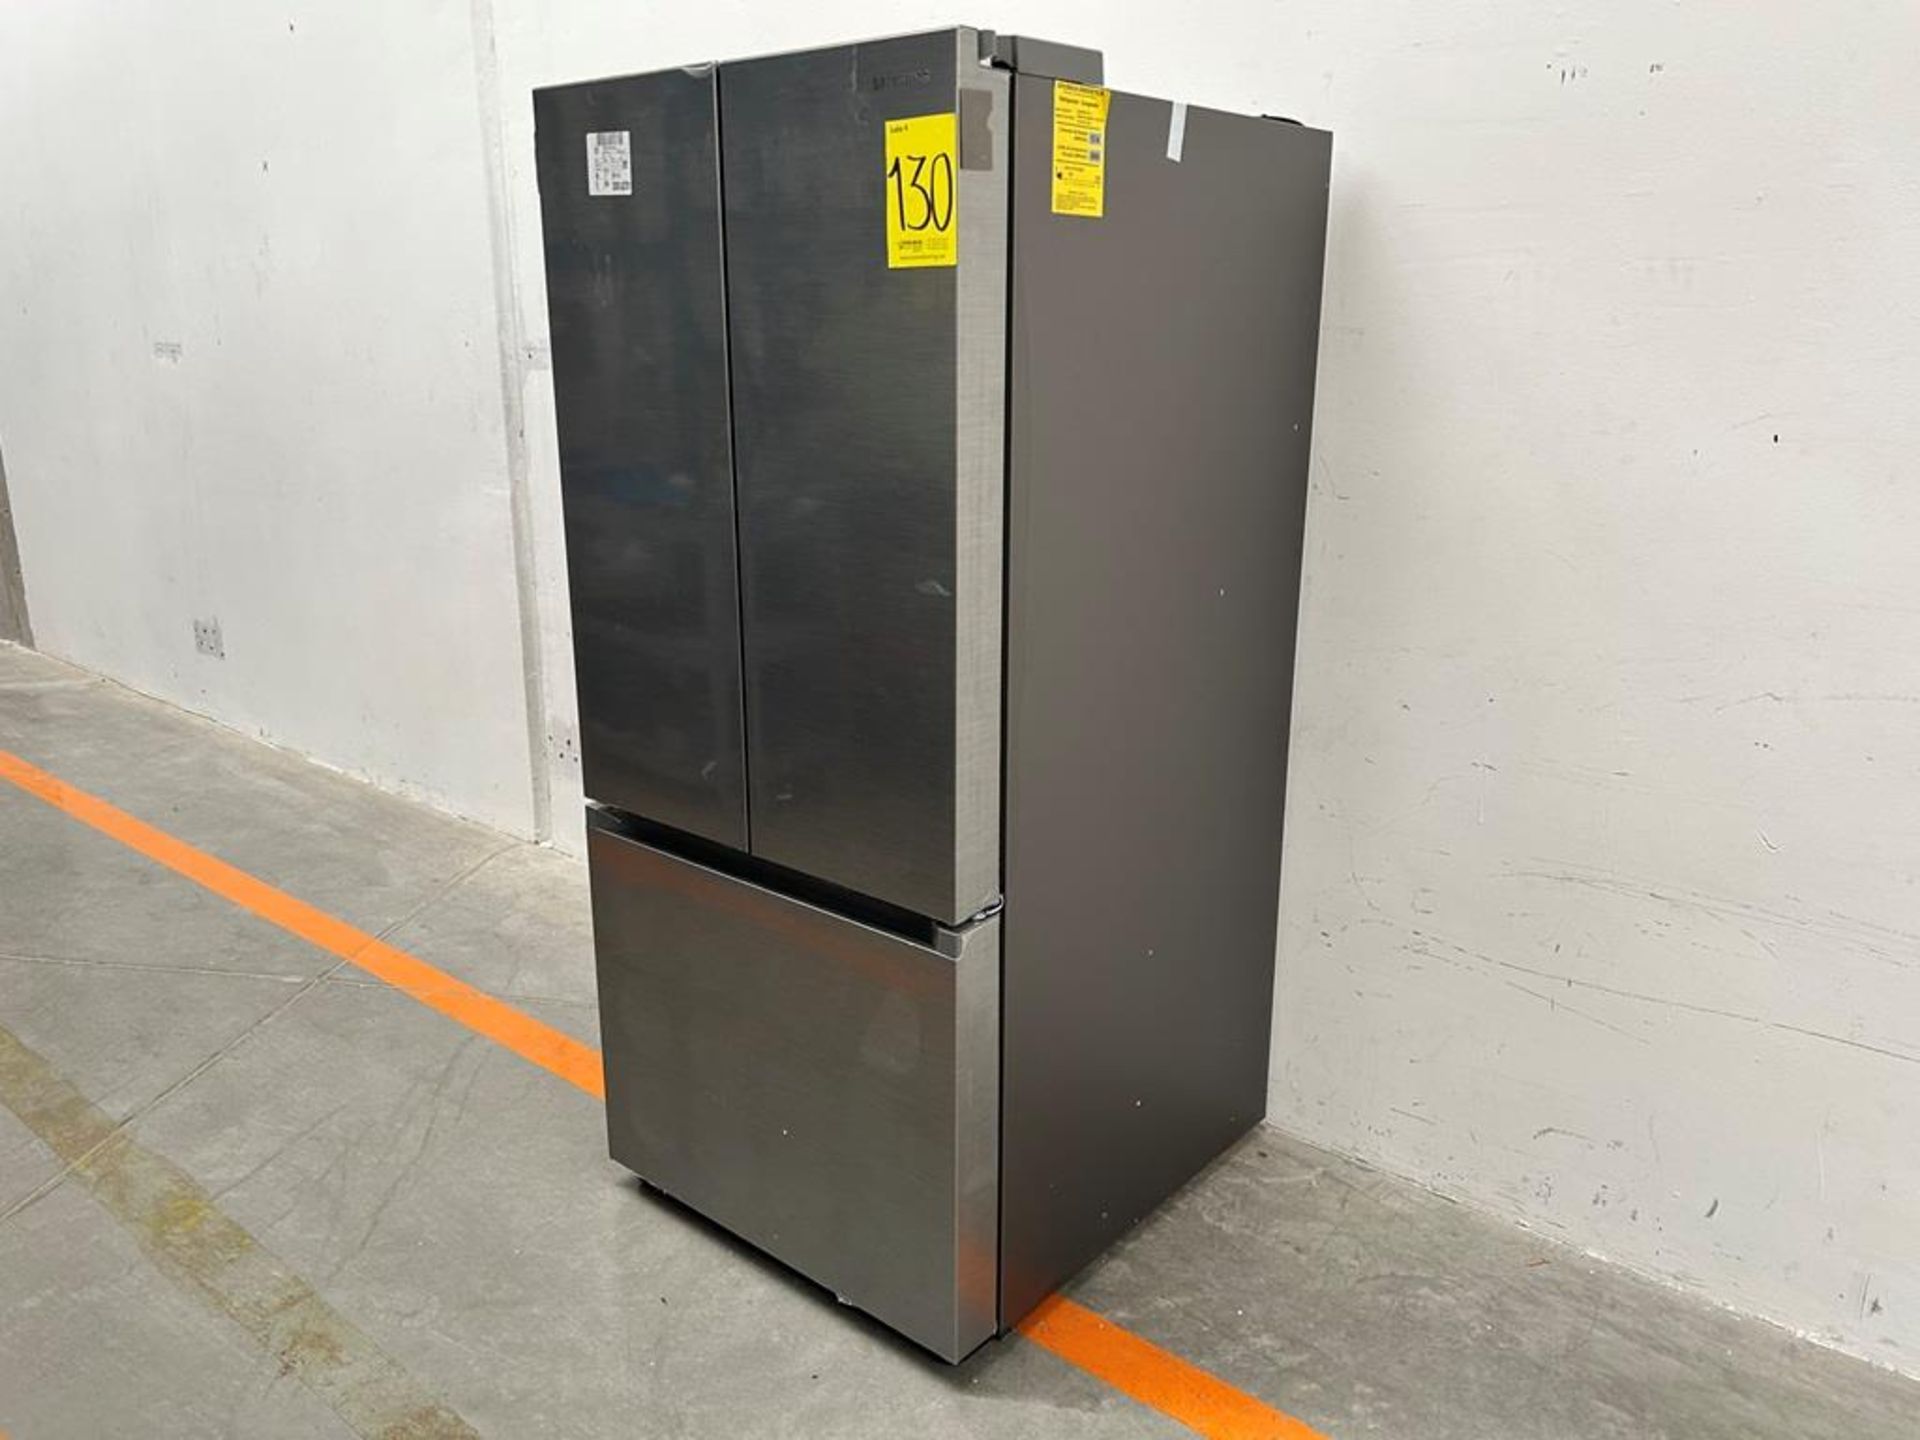 (NUEVO) Refrigerador Marca SAMSUNG, Modelo RF22A4010S9, Serie 00216L, Color GRIS - Image 3 of 11